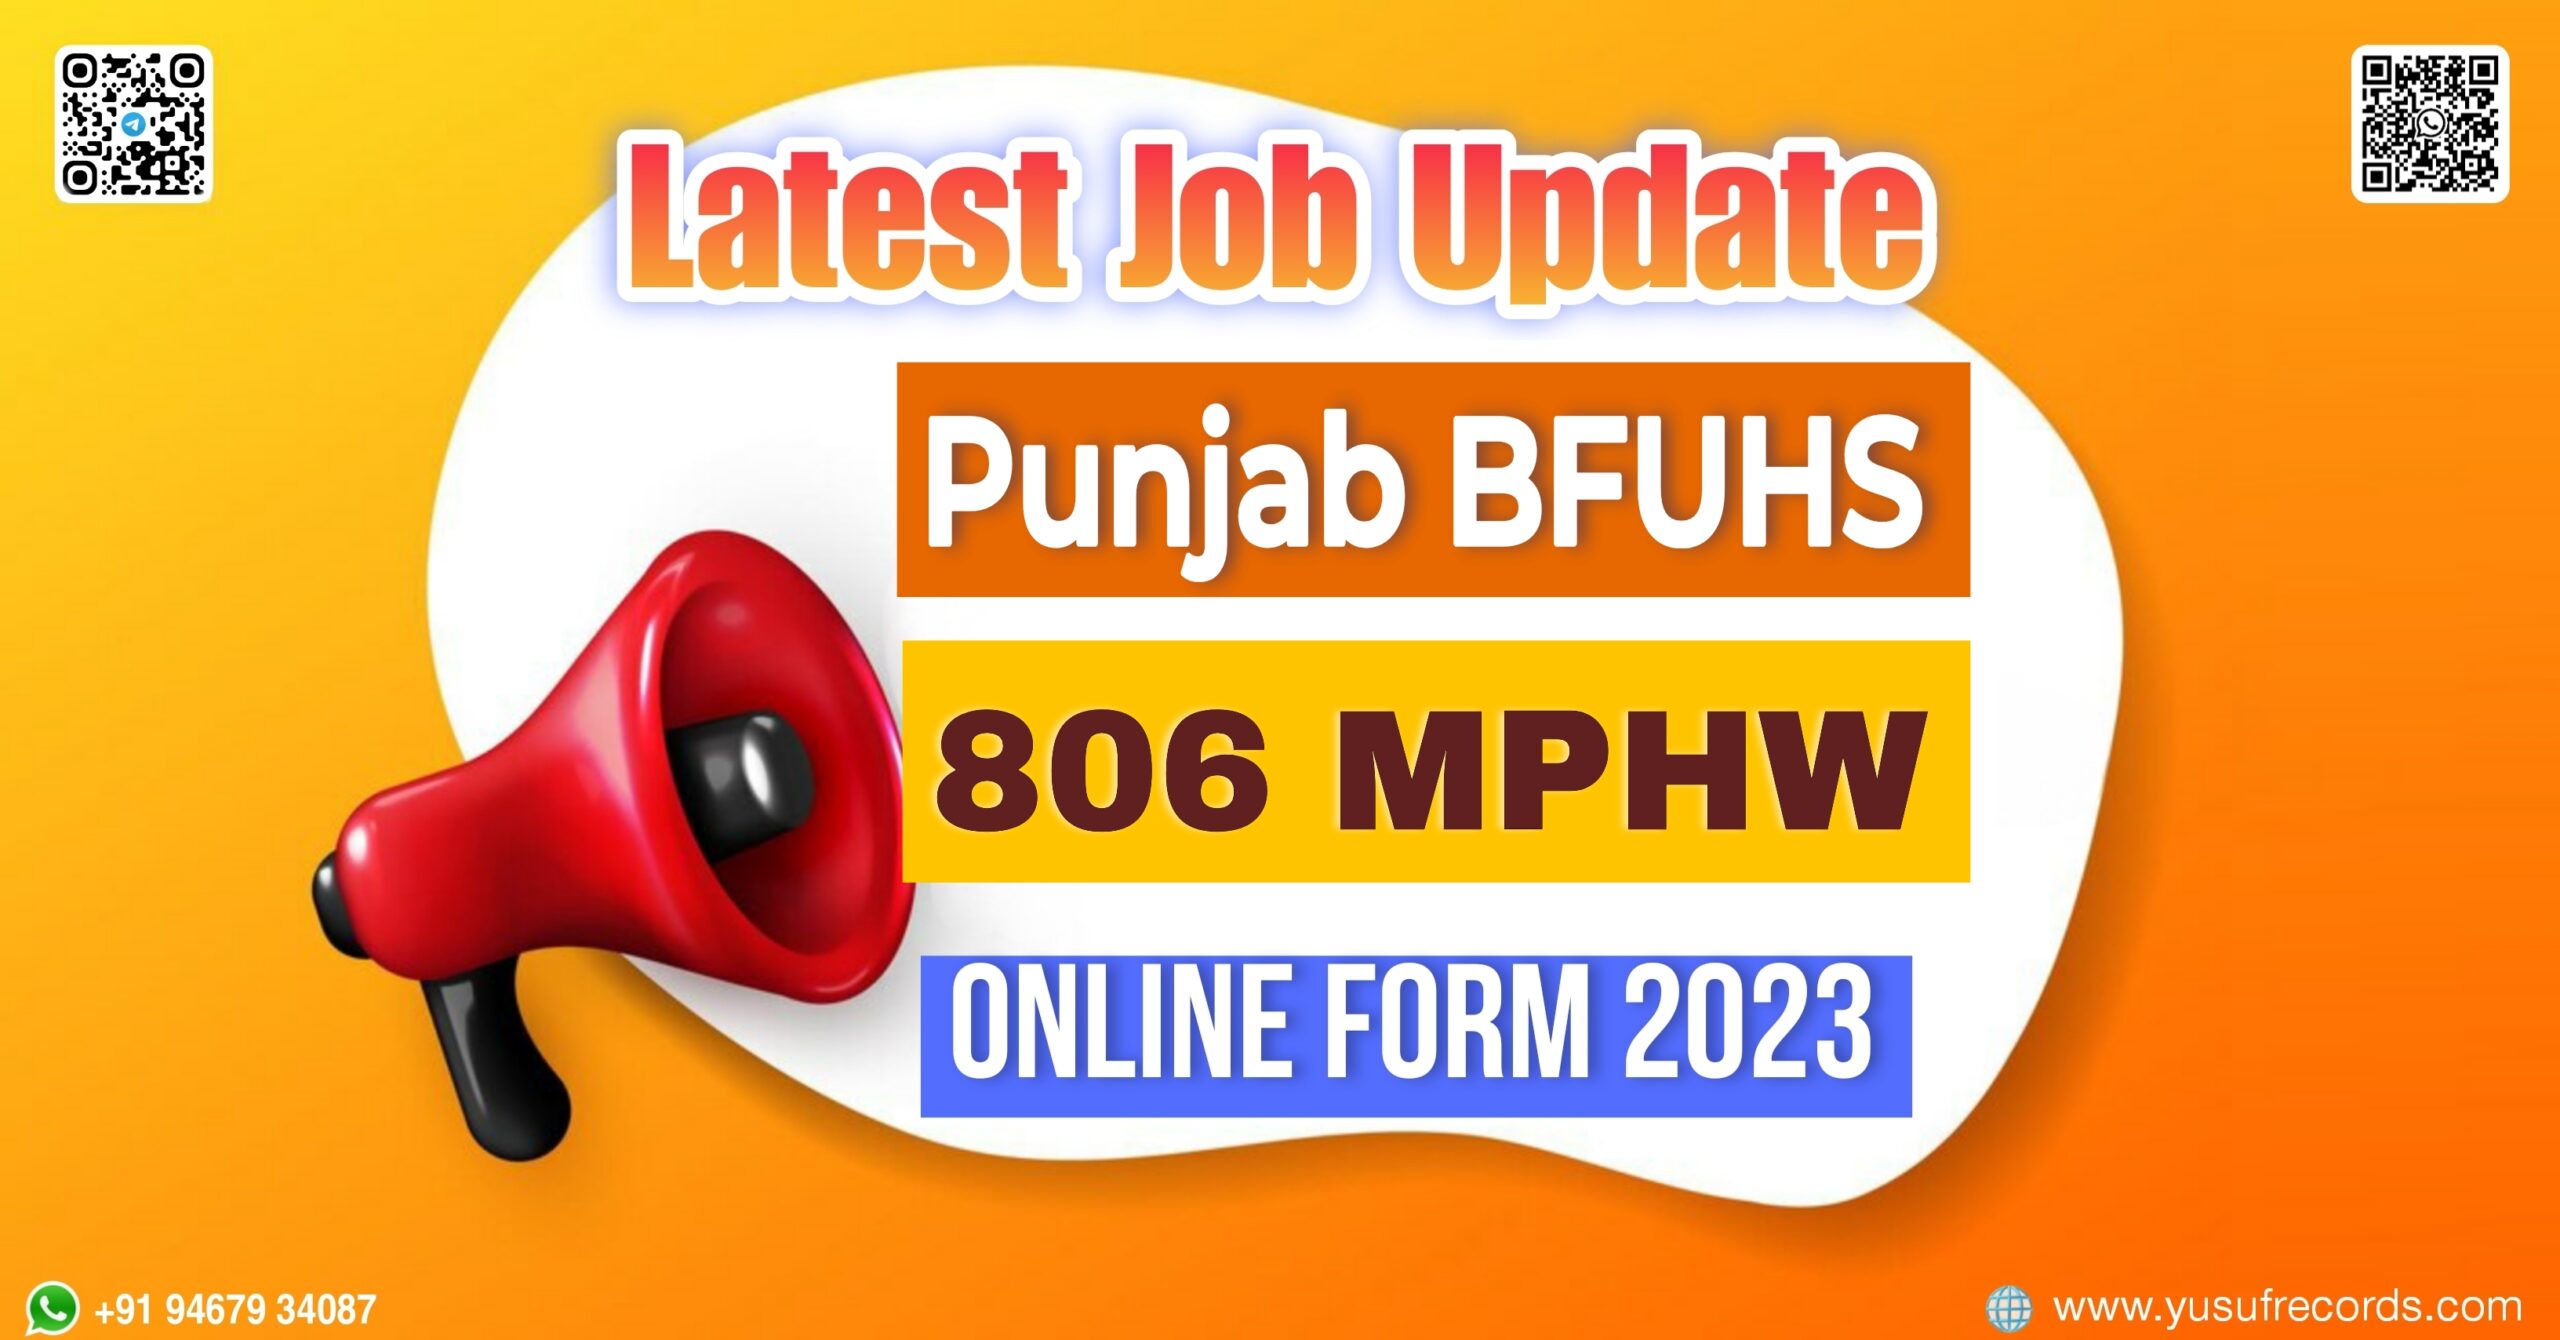 Punjab BFUHS 806 MPHW Online Form 2023 yusufrecords.com